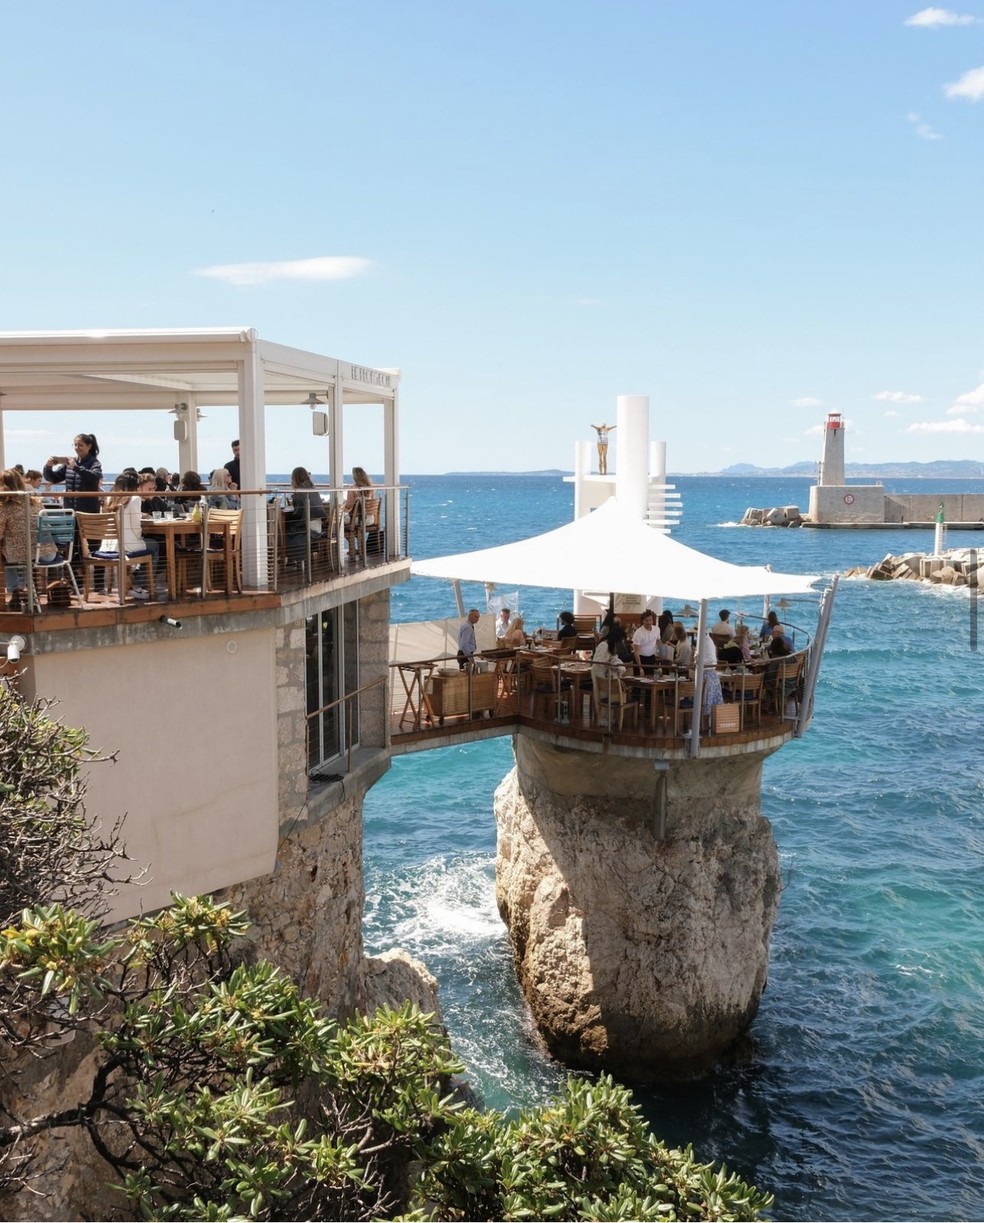 O bar e restaurante Le Plongeoir em Nice — Foto: Marion Butet